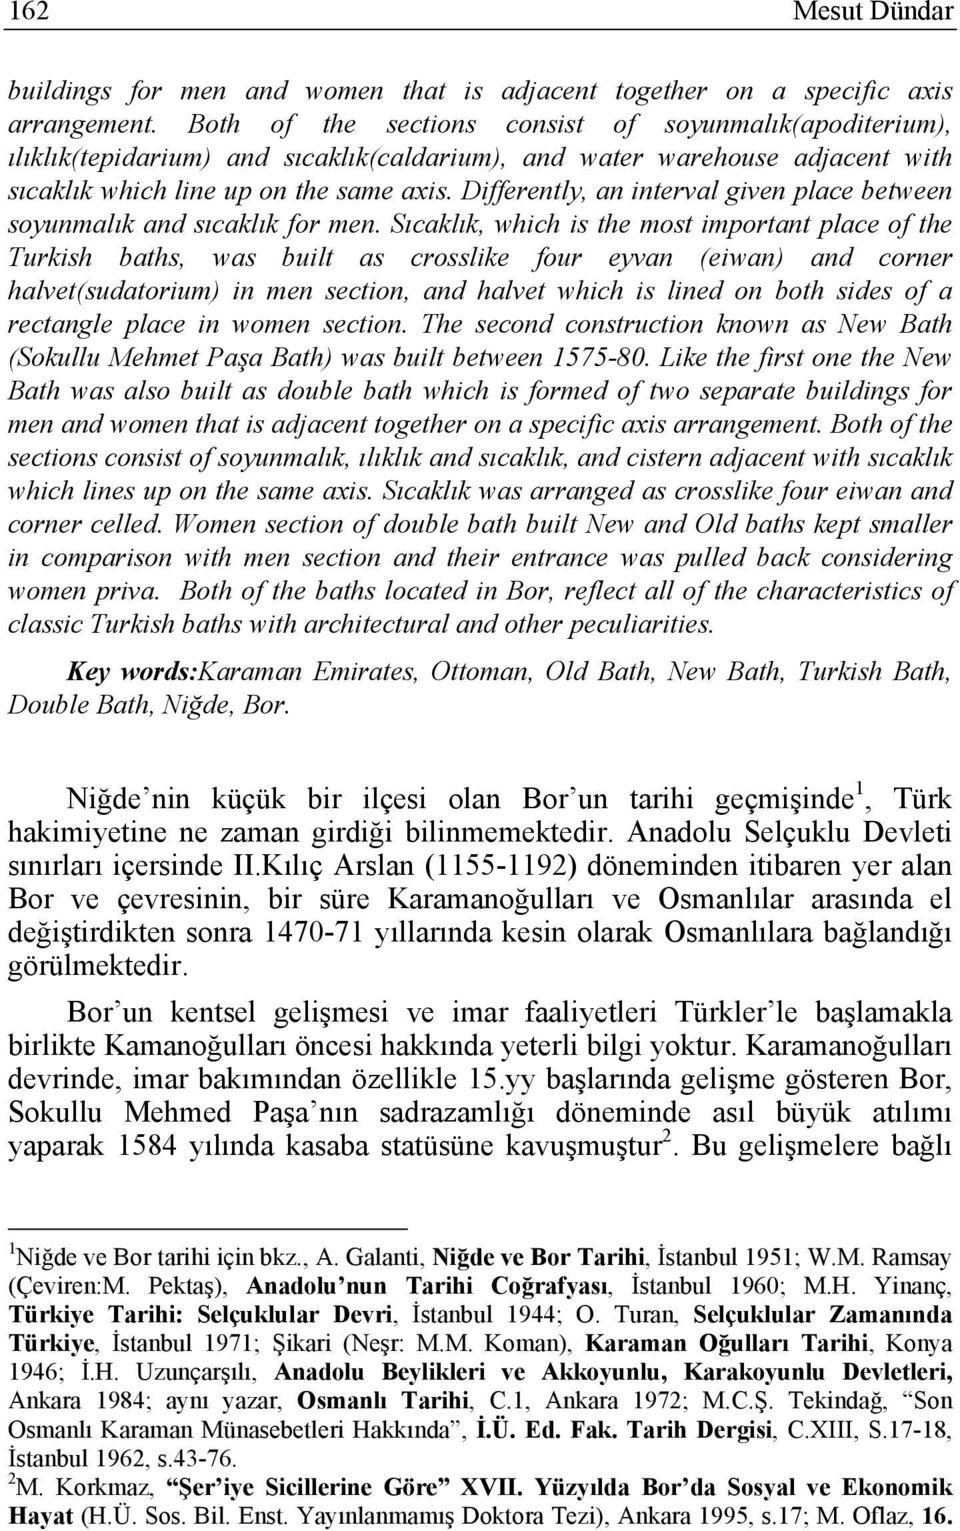 Differently, an interval given place between soyunmalık and sıcaklık for men.